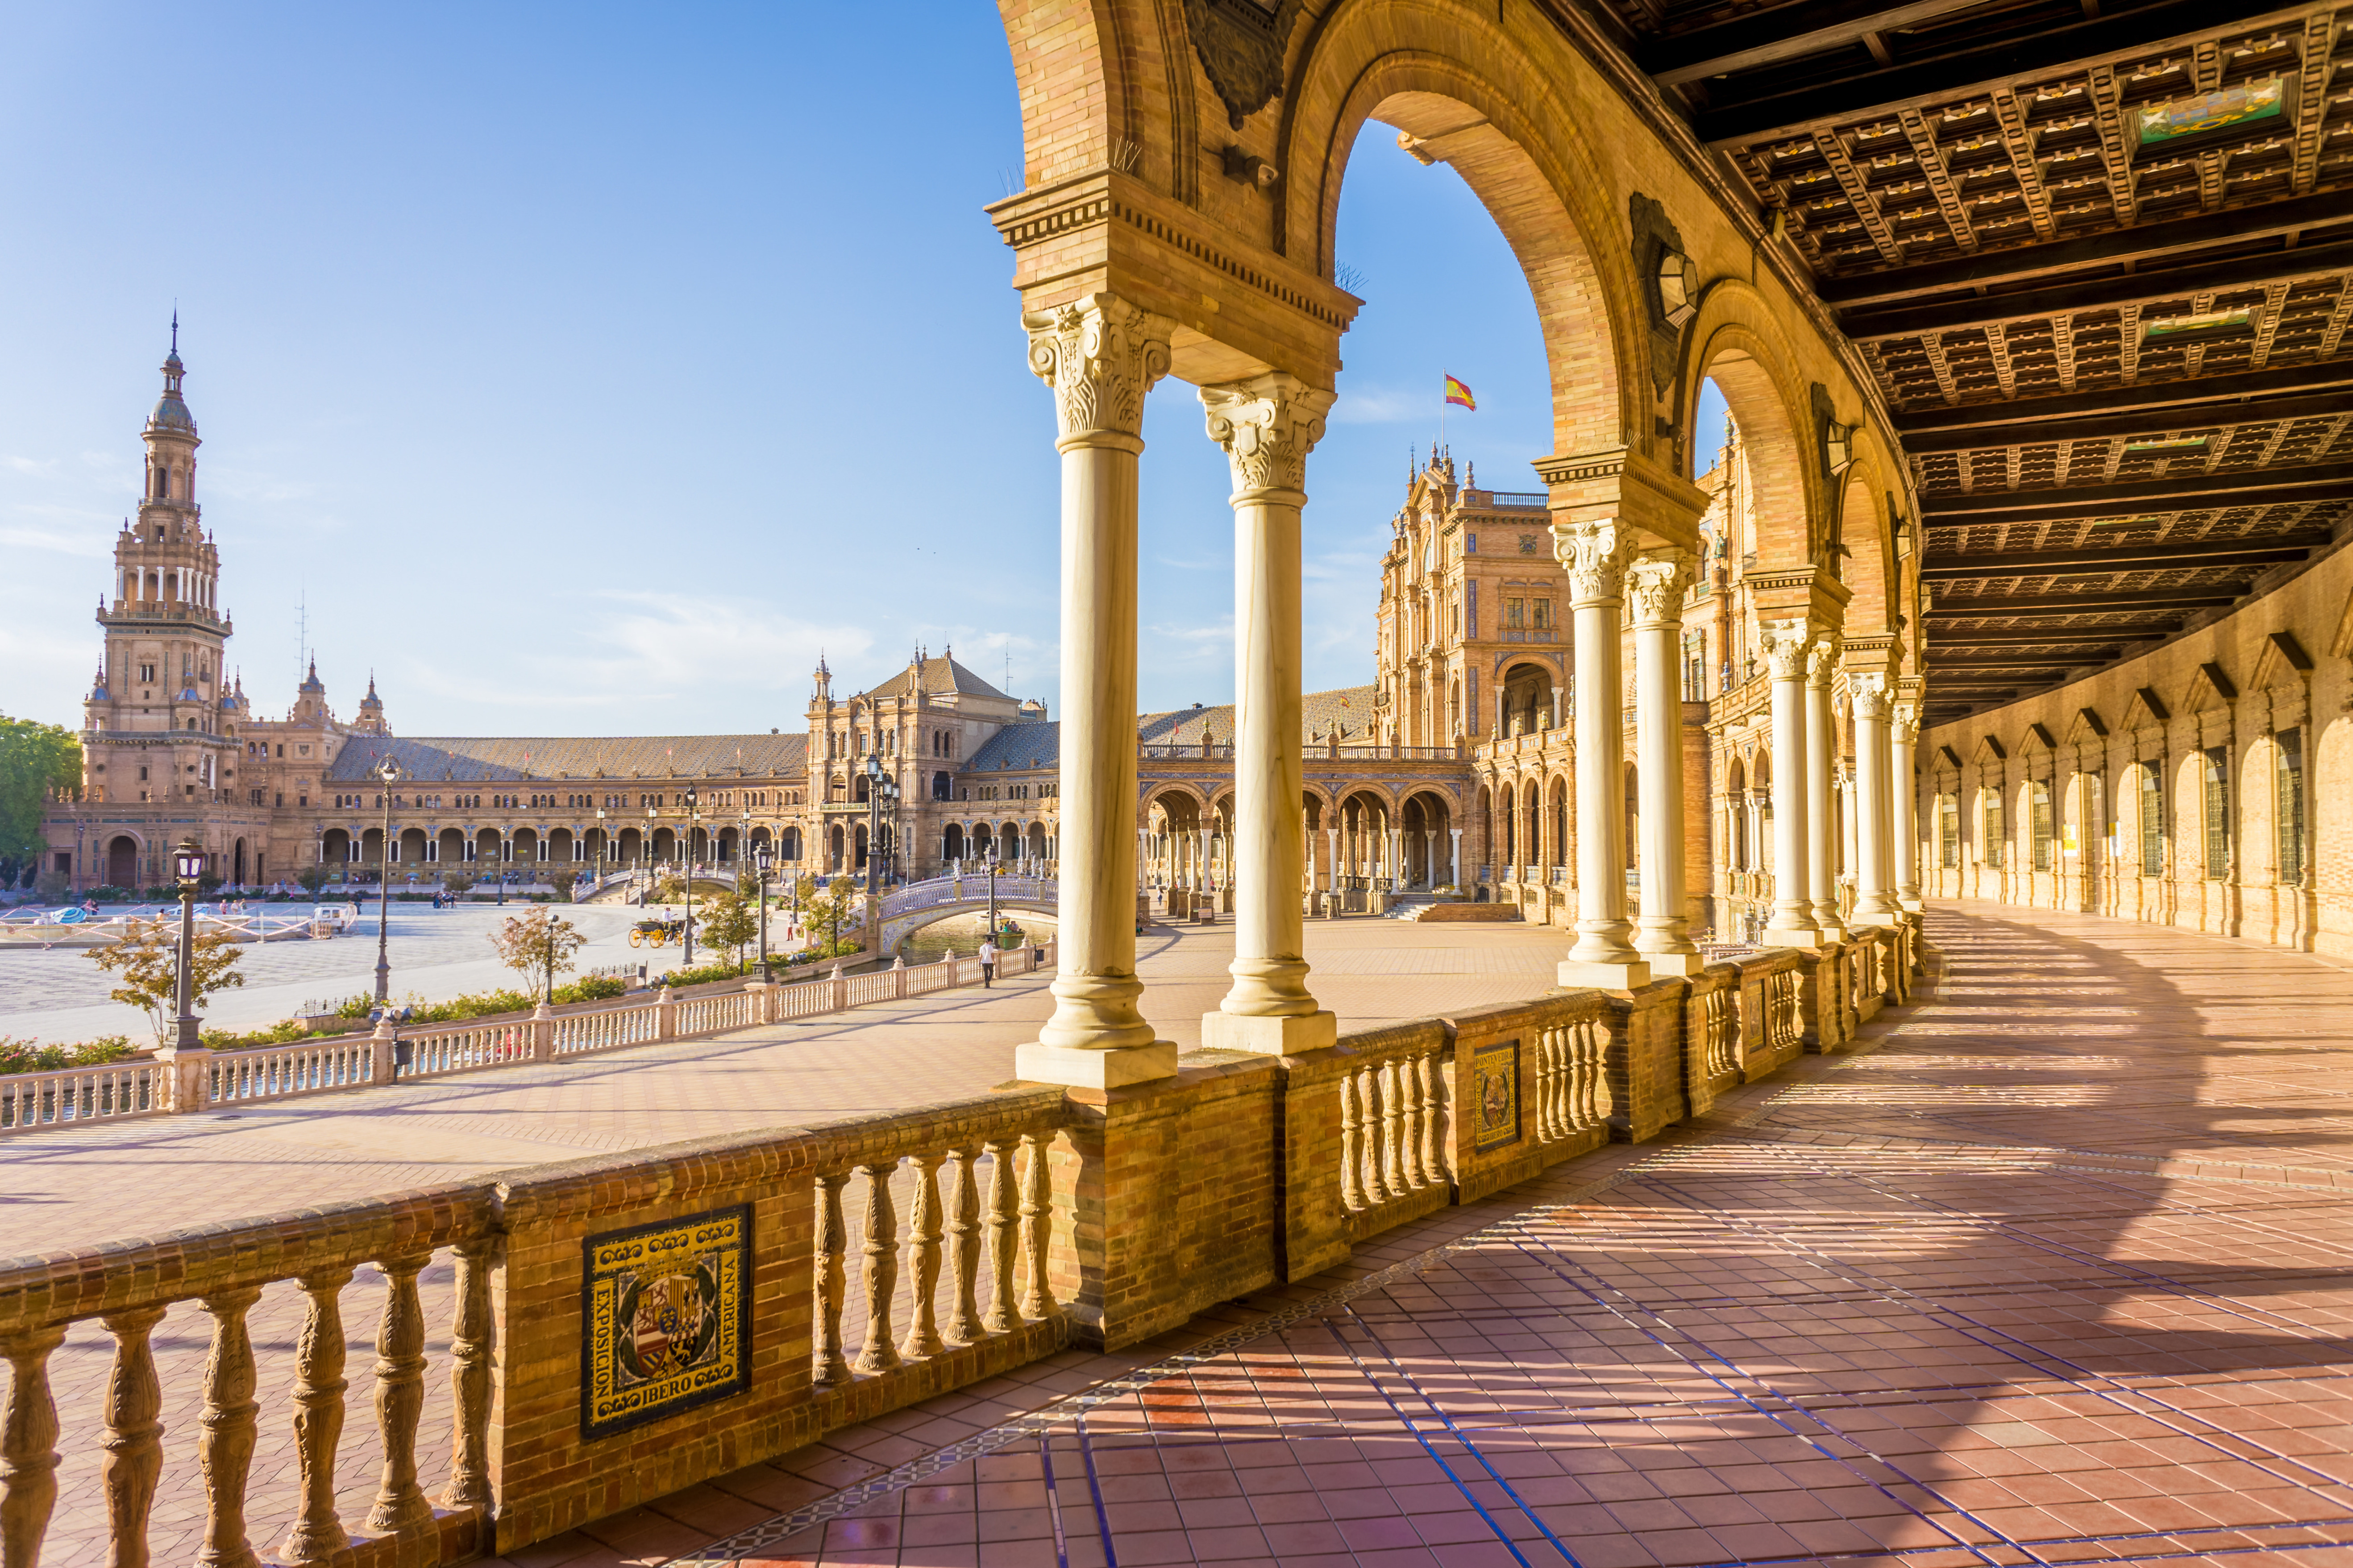 Plaza de España | Seville, Spain Attractions - Lonely Planet